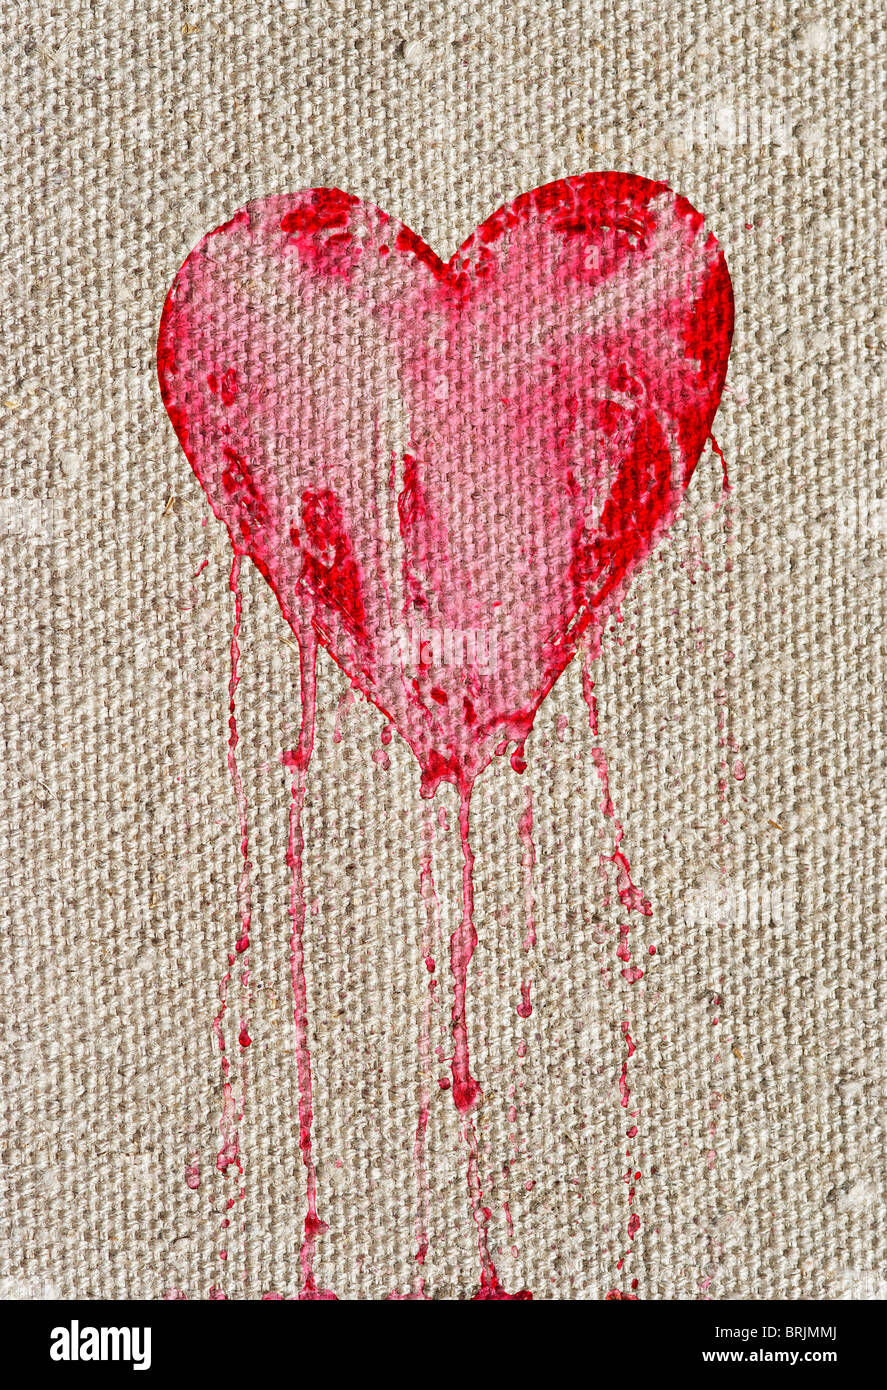 bleeding heart - symbol of love - in grunge style Stock Photo